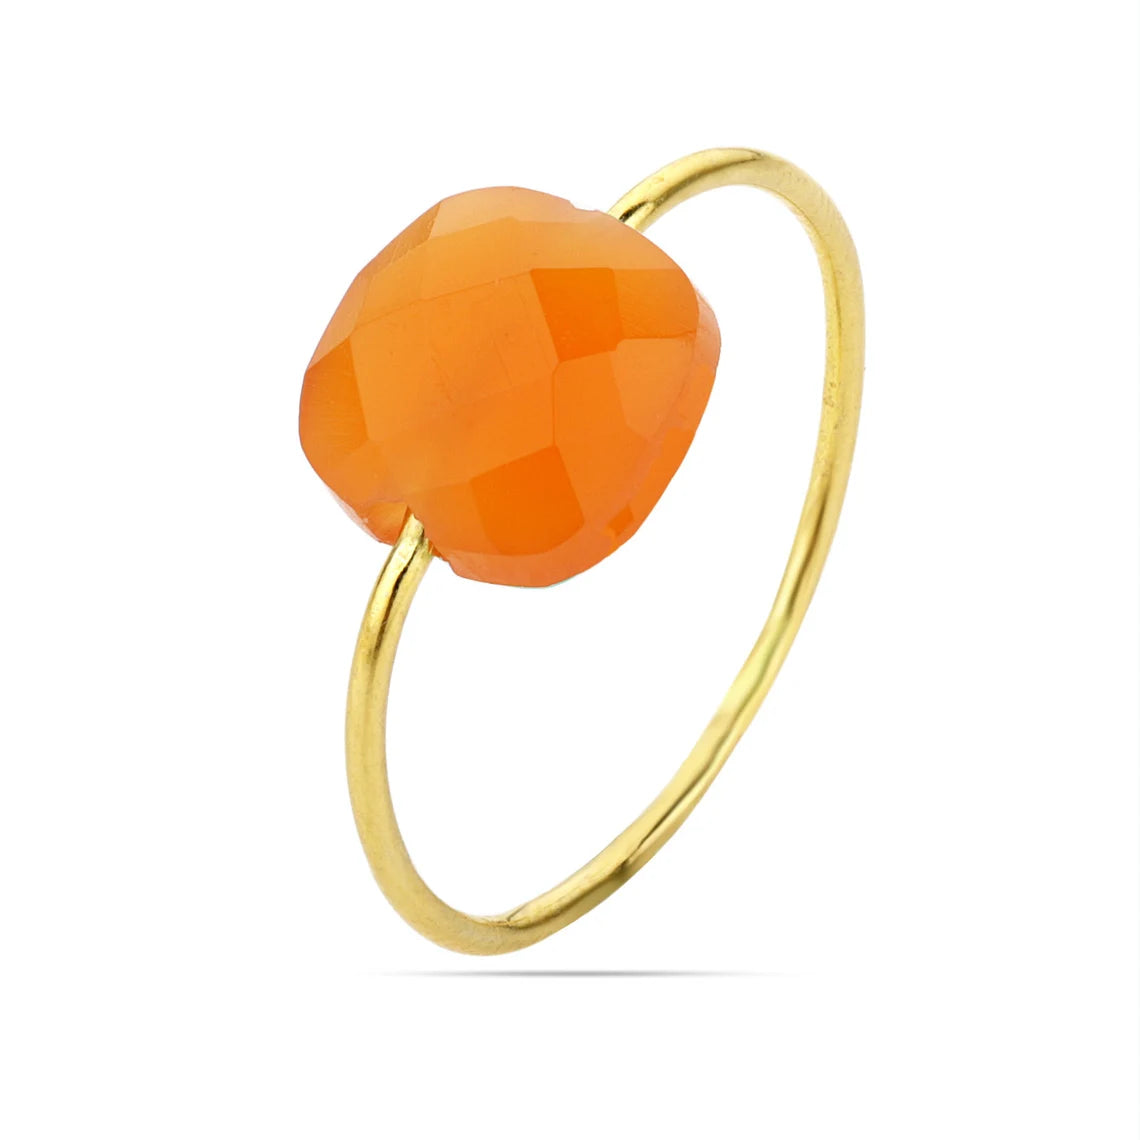 Carnelian Ring - Drilled Carnelian Ring - Checker Cut Ring - Cushion Ring - Gemstone Ring - Gold Ring - Birthstone Ring